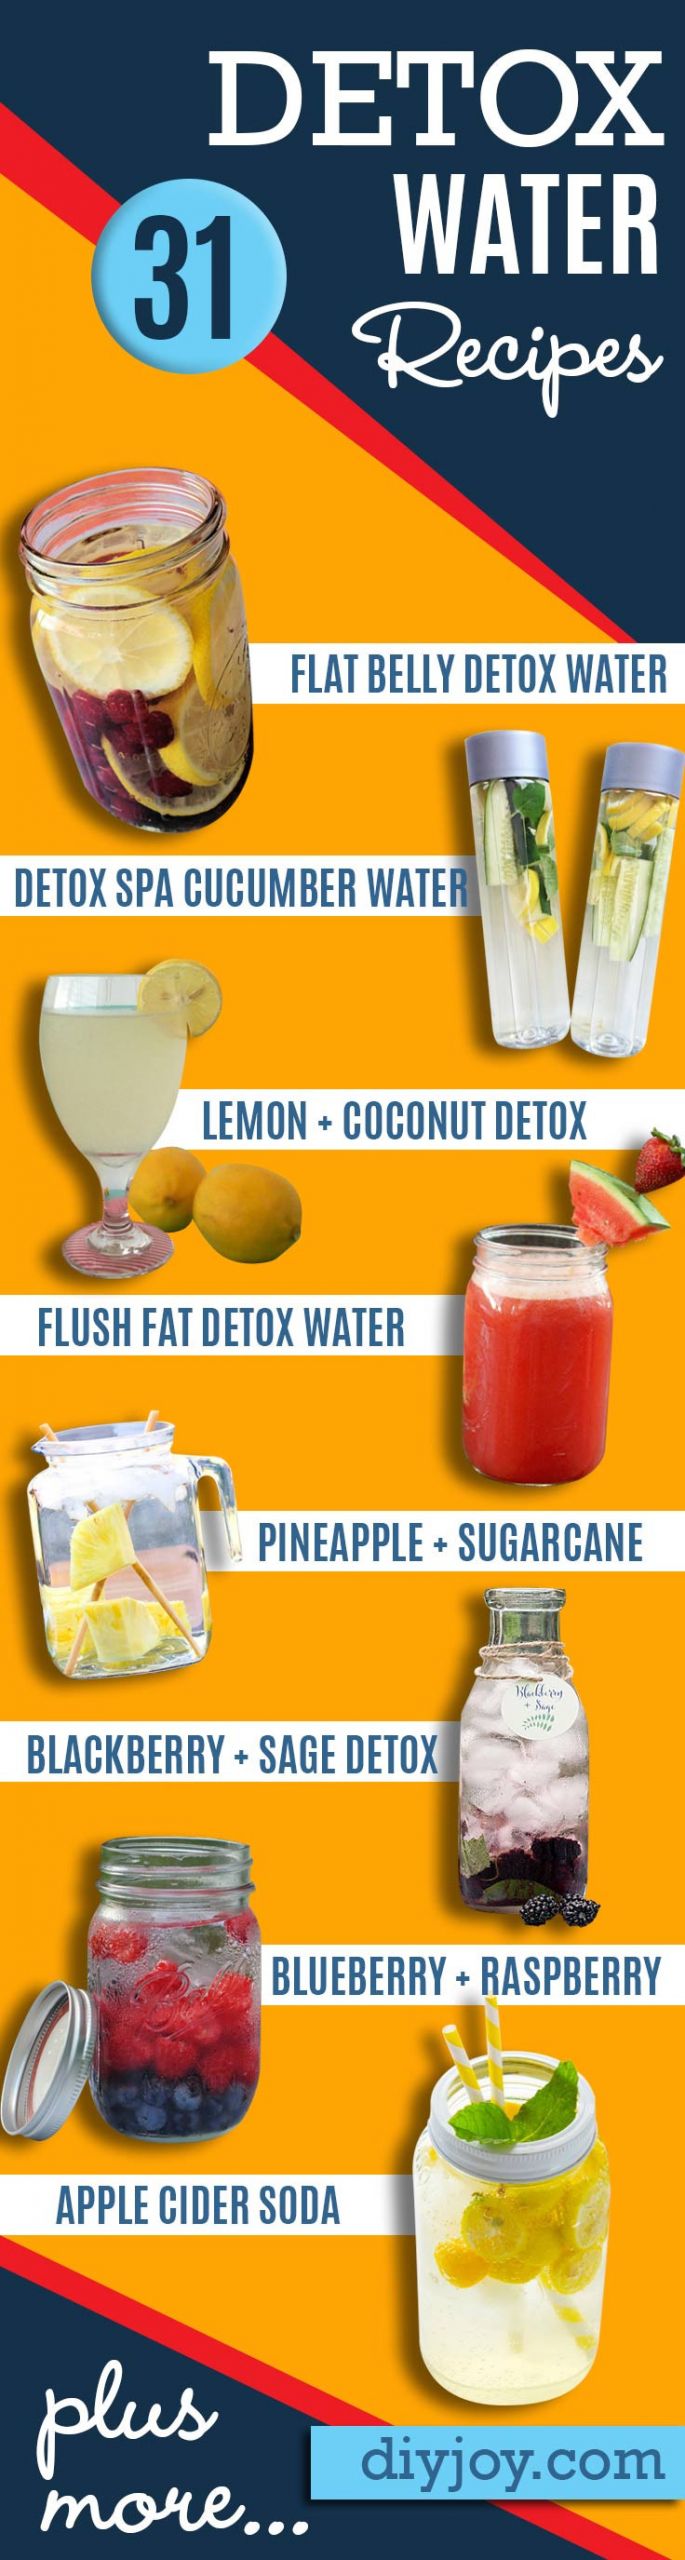 Weight Loss Detox Water Recipes Elegant 31 Diy Detox Water Recipes Drinks to Start F 2016 Right